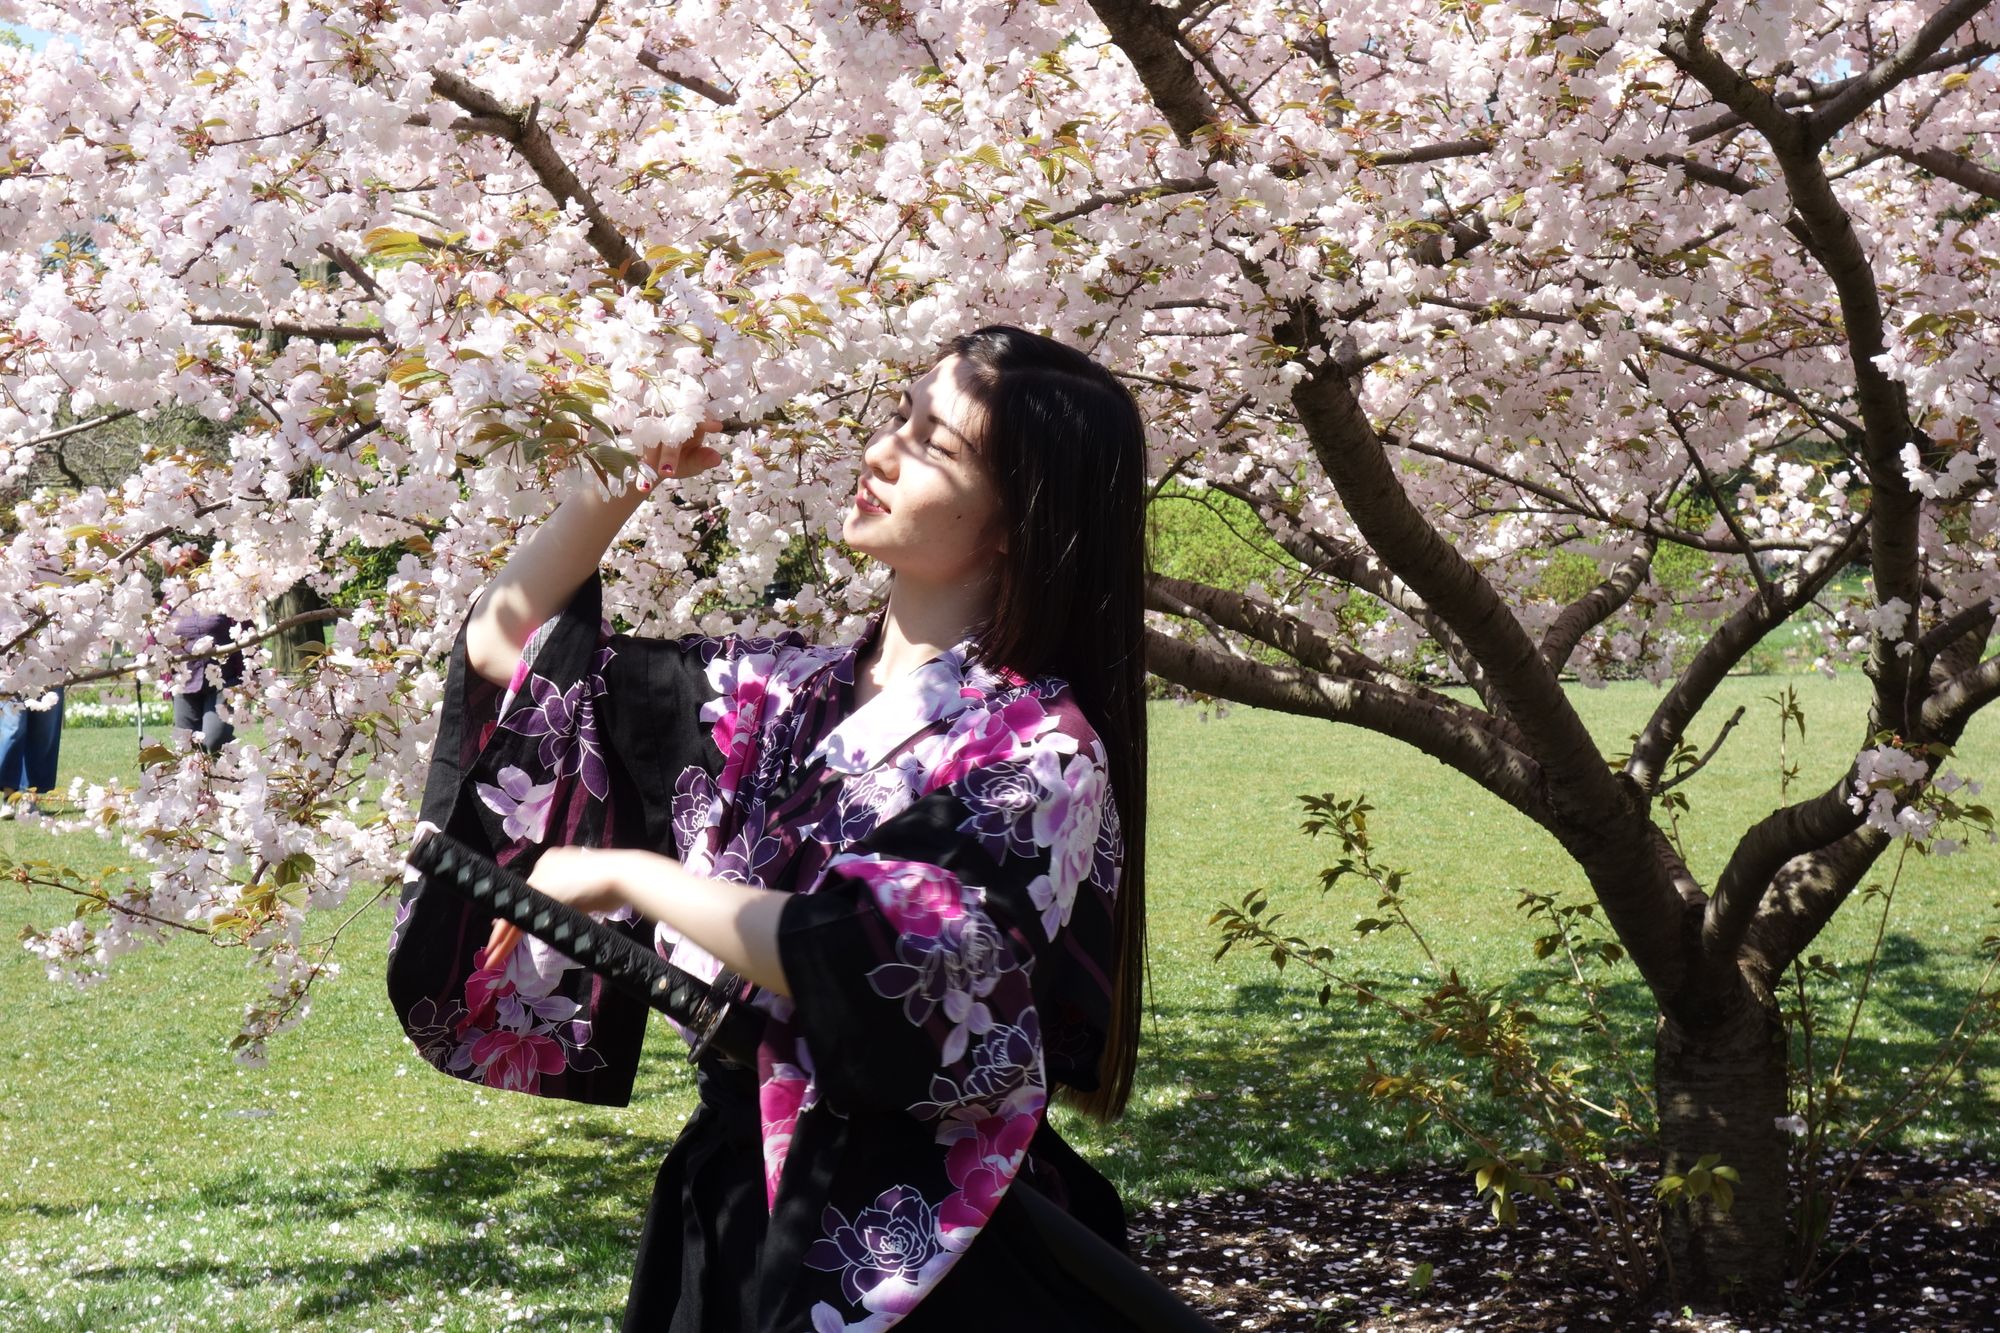 Kaoru Tani of the Yoshi Amao and Samurai Sword Soul poses by bloomed cherry blossom. (Photo Kadia Goba/Bklyner)